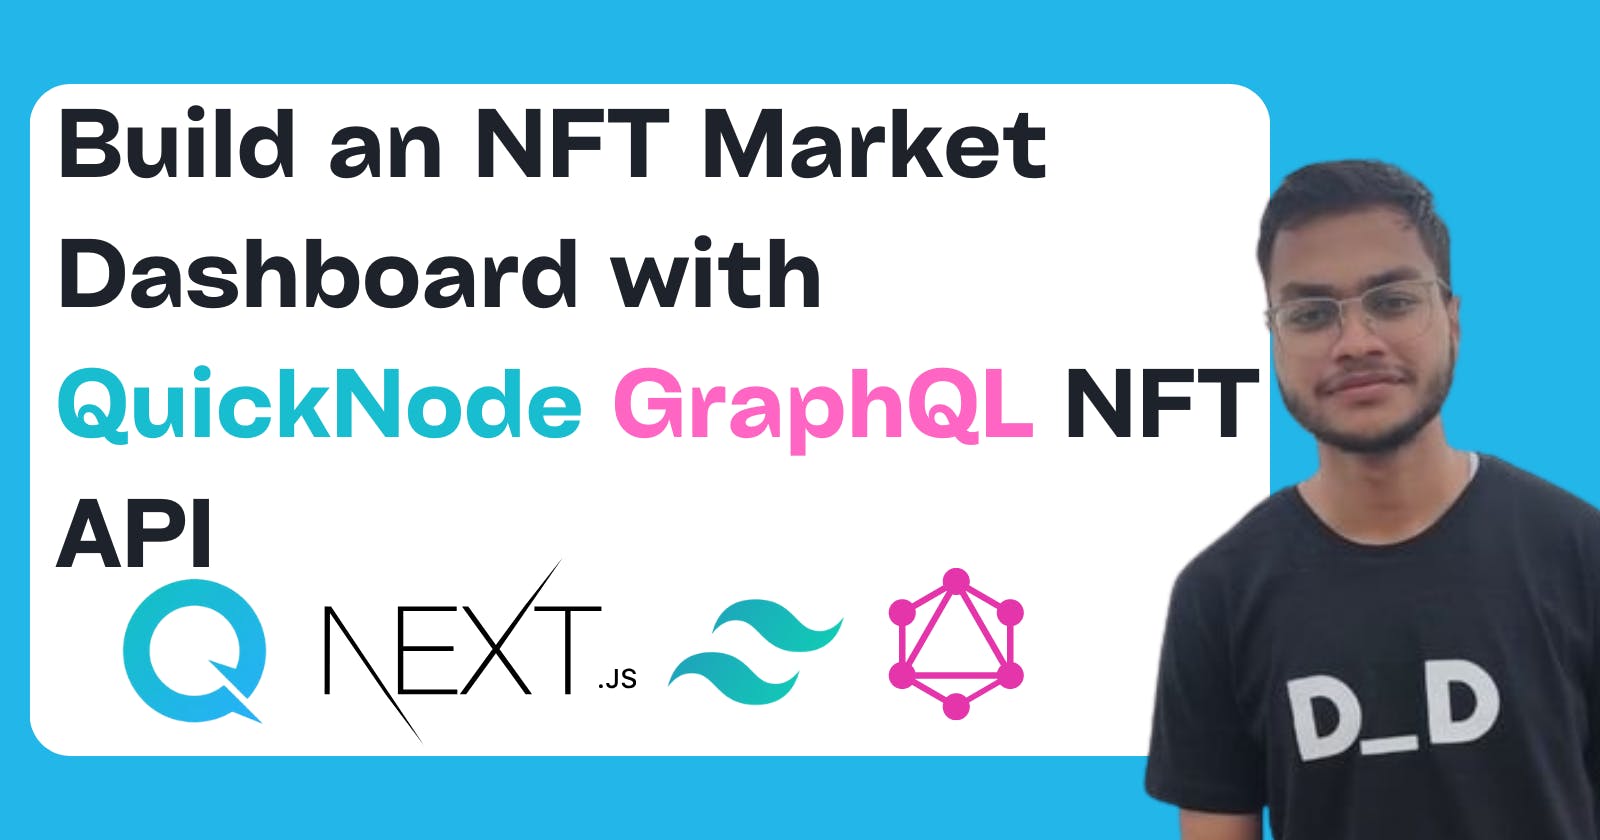 How to Build an NFT Market Dashboard Using QuickNode's GraphQL NFT API